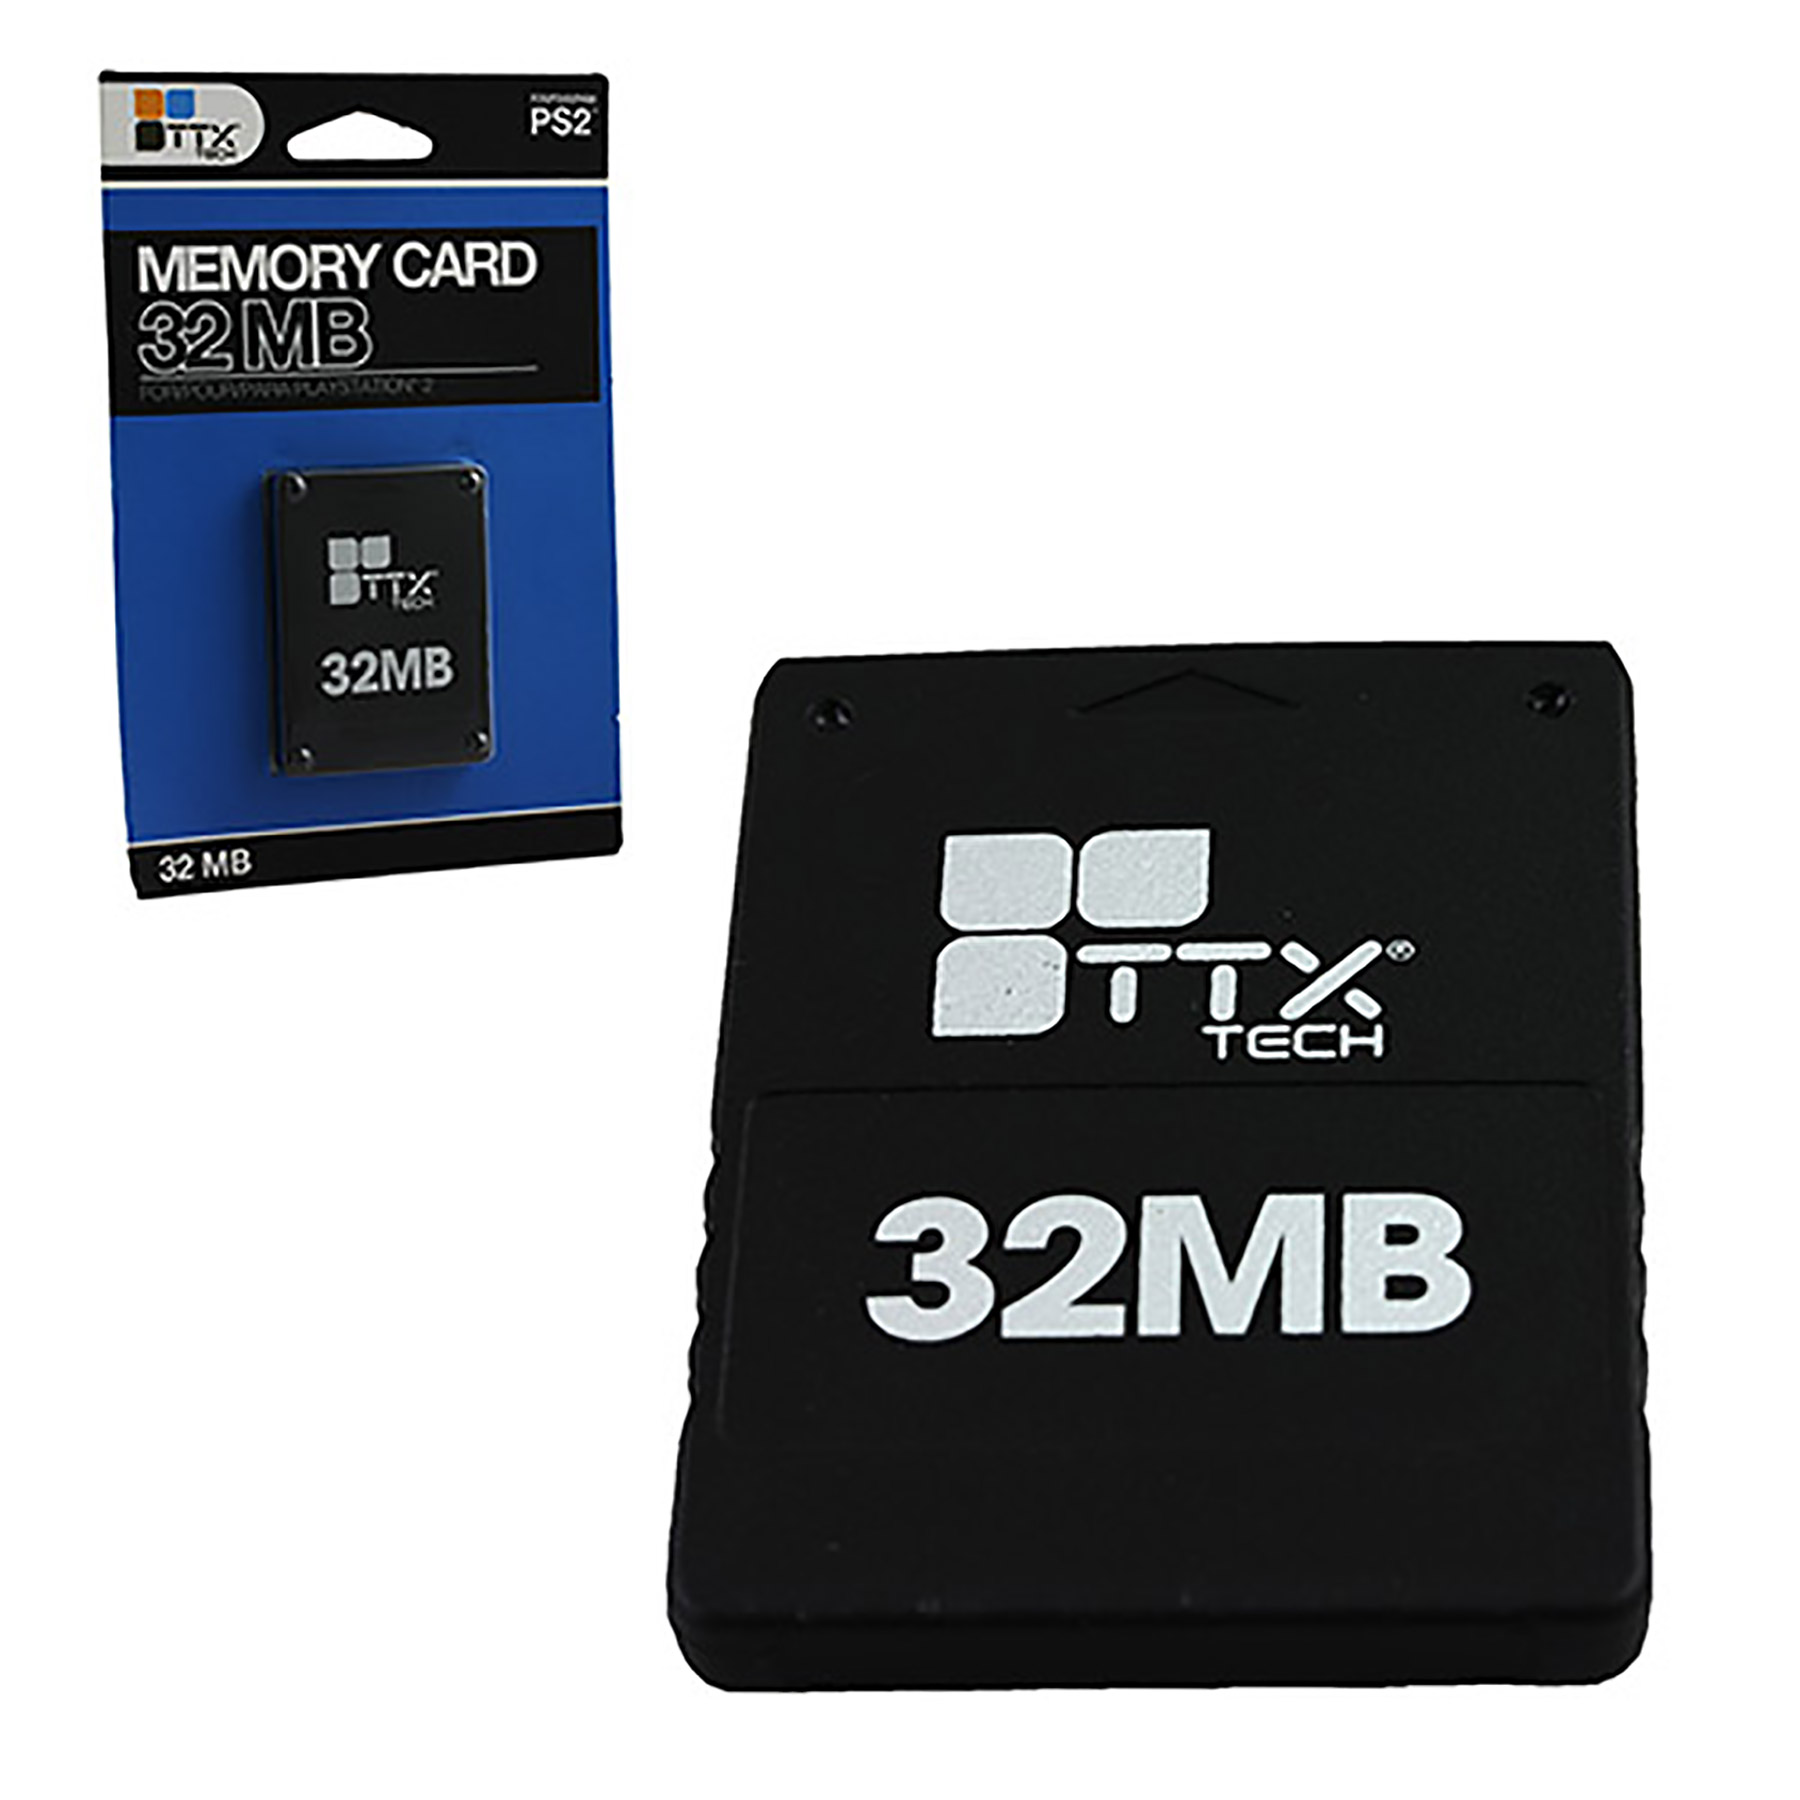 Мемори карт. Ps2 Memory Card 8mb. Memory Card 32 MB EXEQ ps2. Карта памяти 32mb для ps2. Ps2 Memory Card steakers.